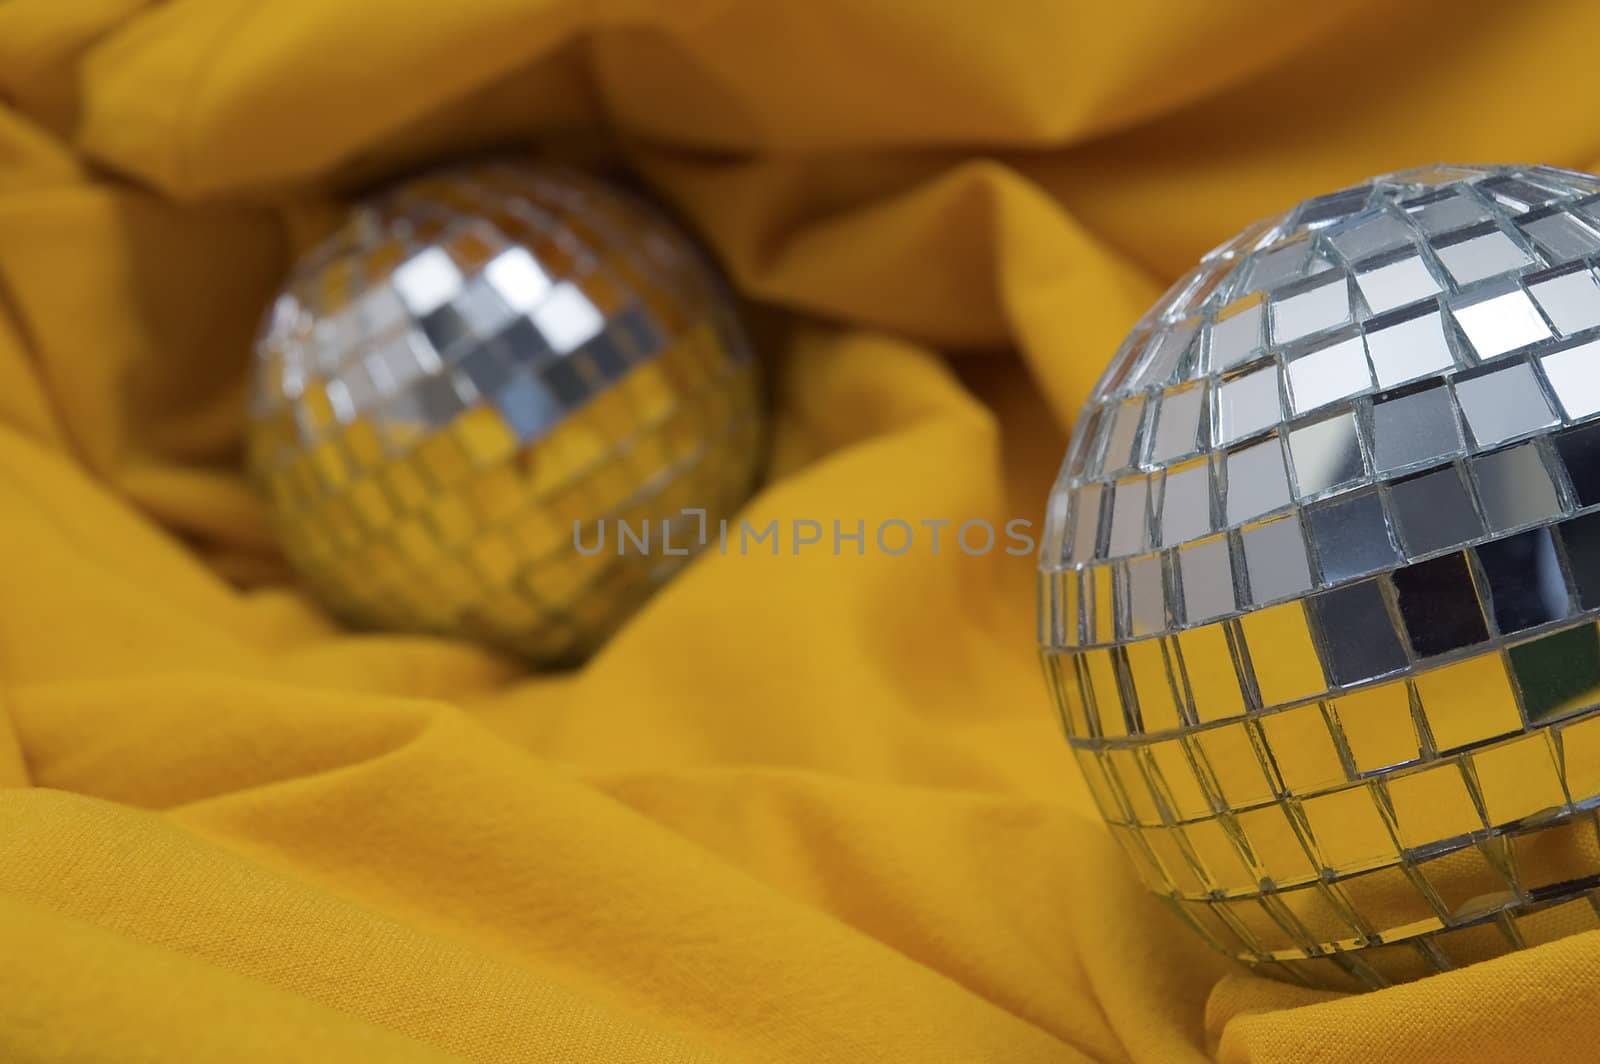 disco balls by rorem